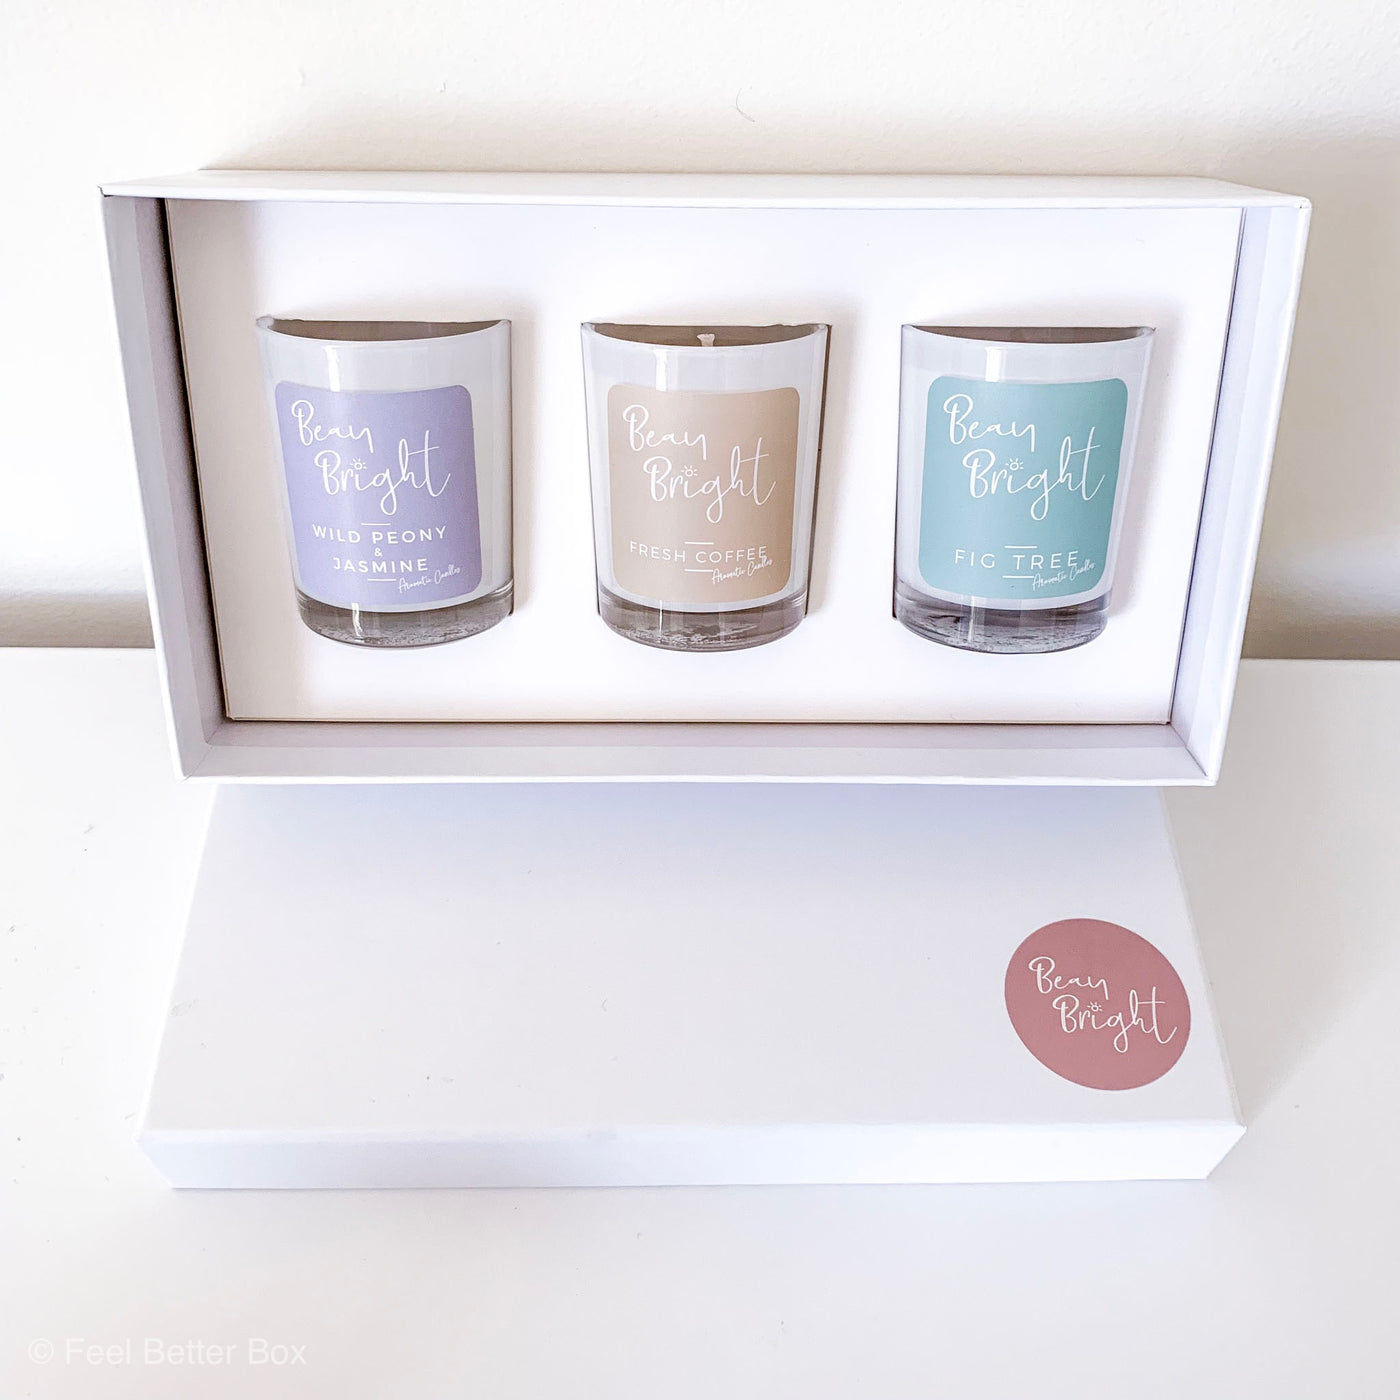 Beau Bright Trio Candles Gift Box - Feel Better Box